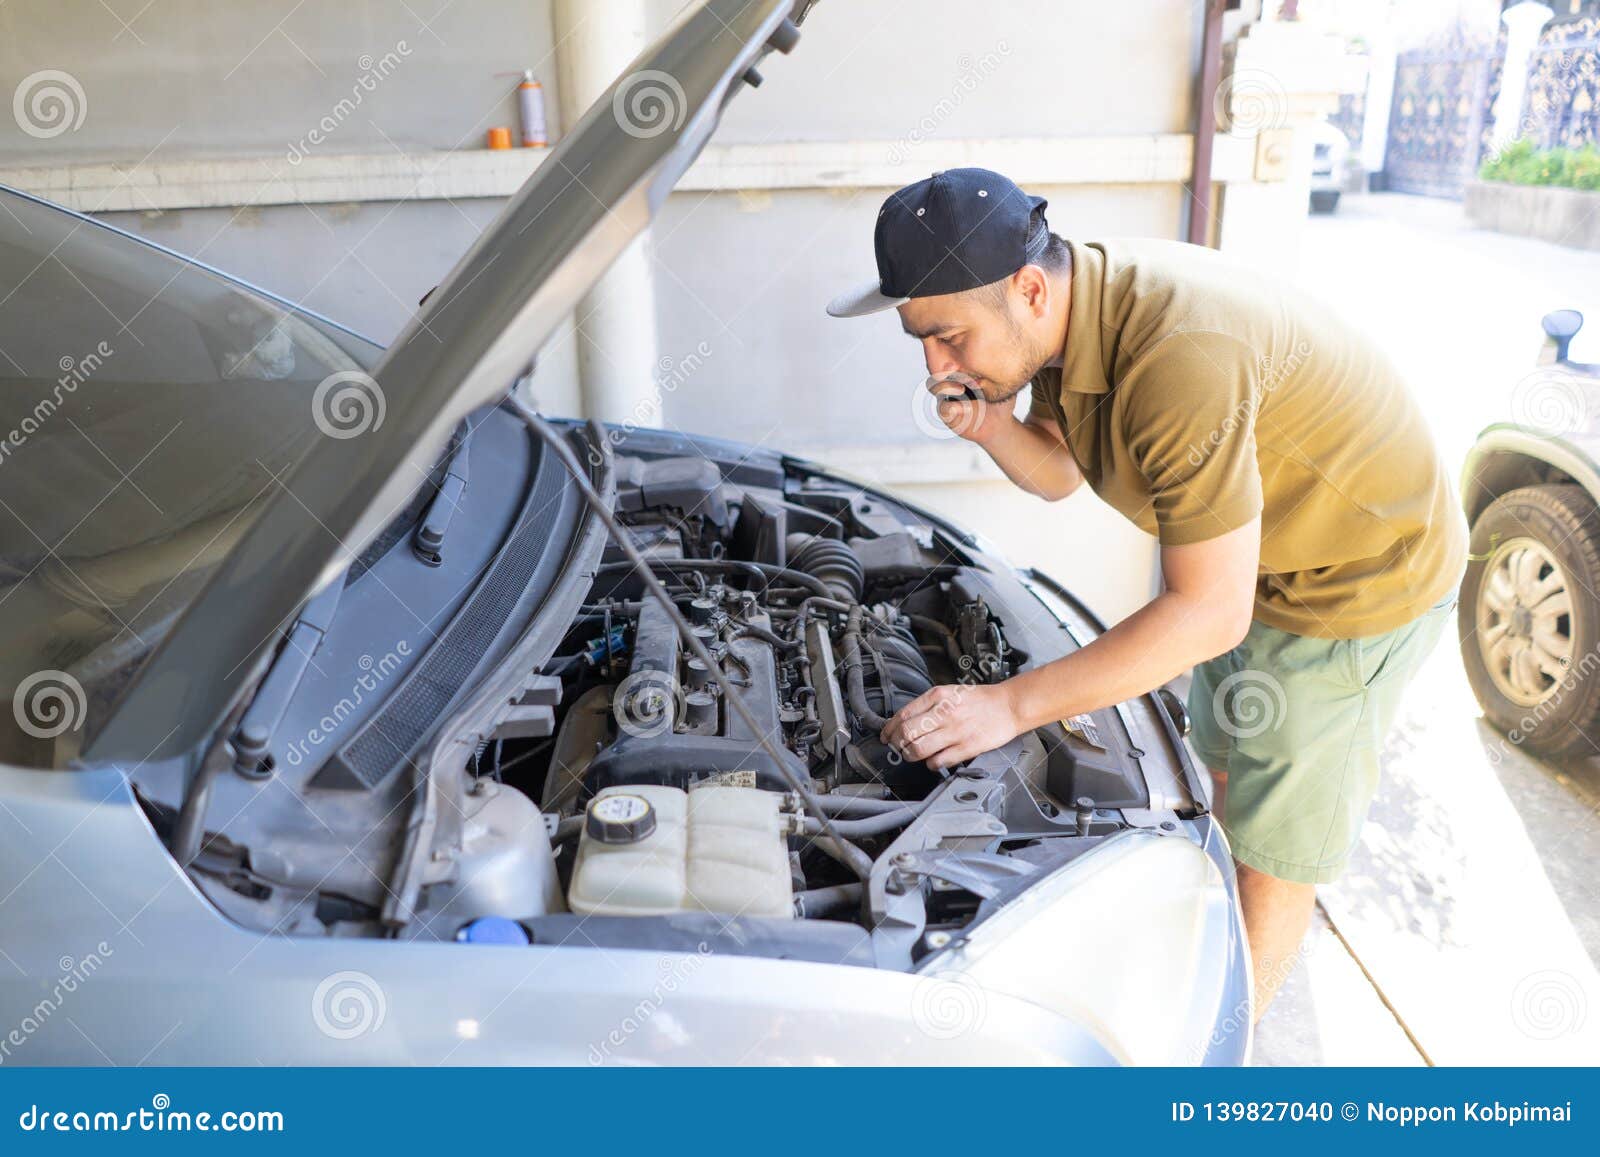 Auto Mechanic Home Service